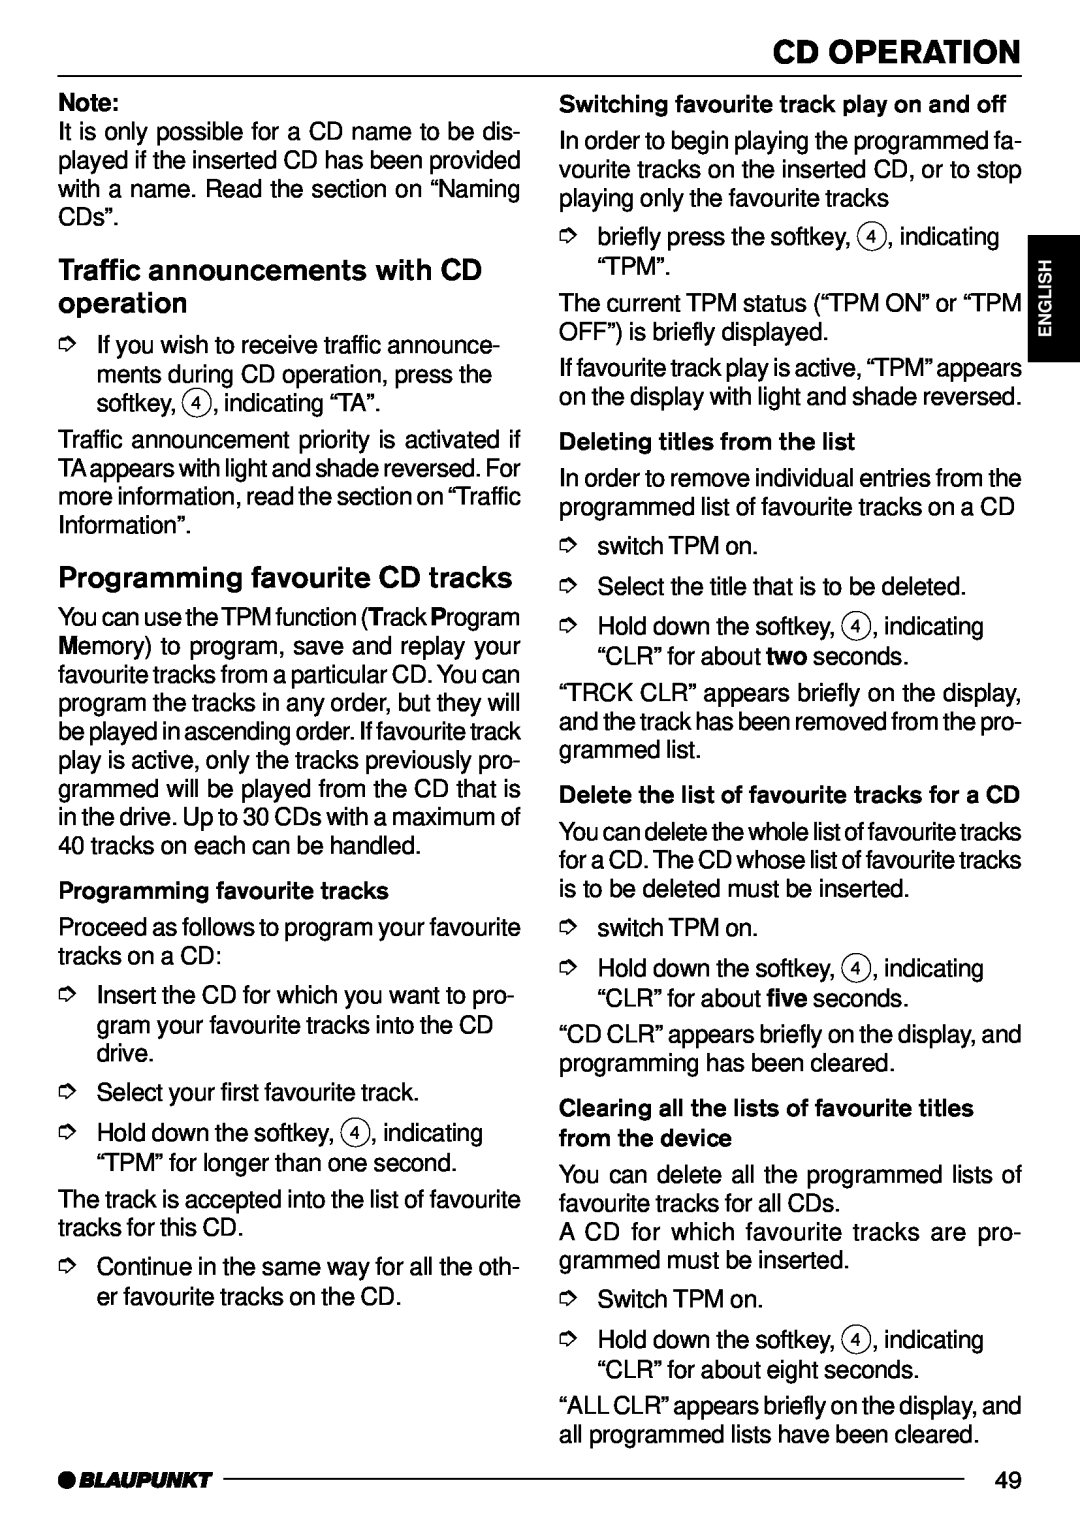 Blaupunkt Denver CD70, Phoenix CD70 Traffic announcements with CD operation, Programming favourite CD tracks, Cd Operation 